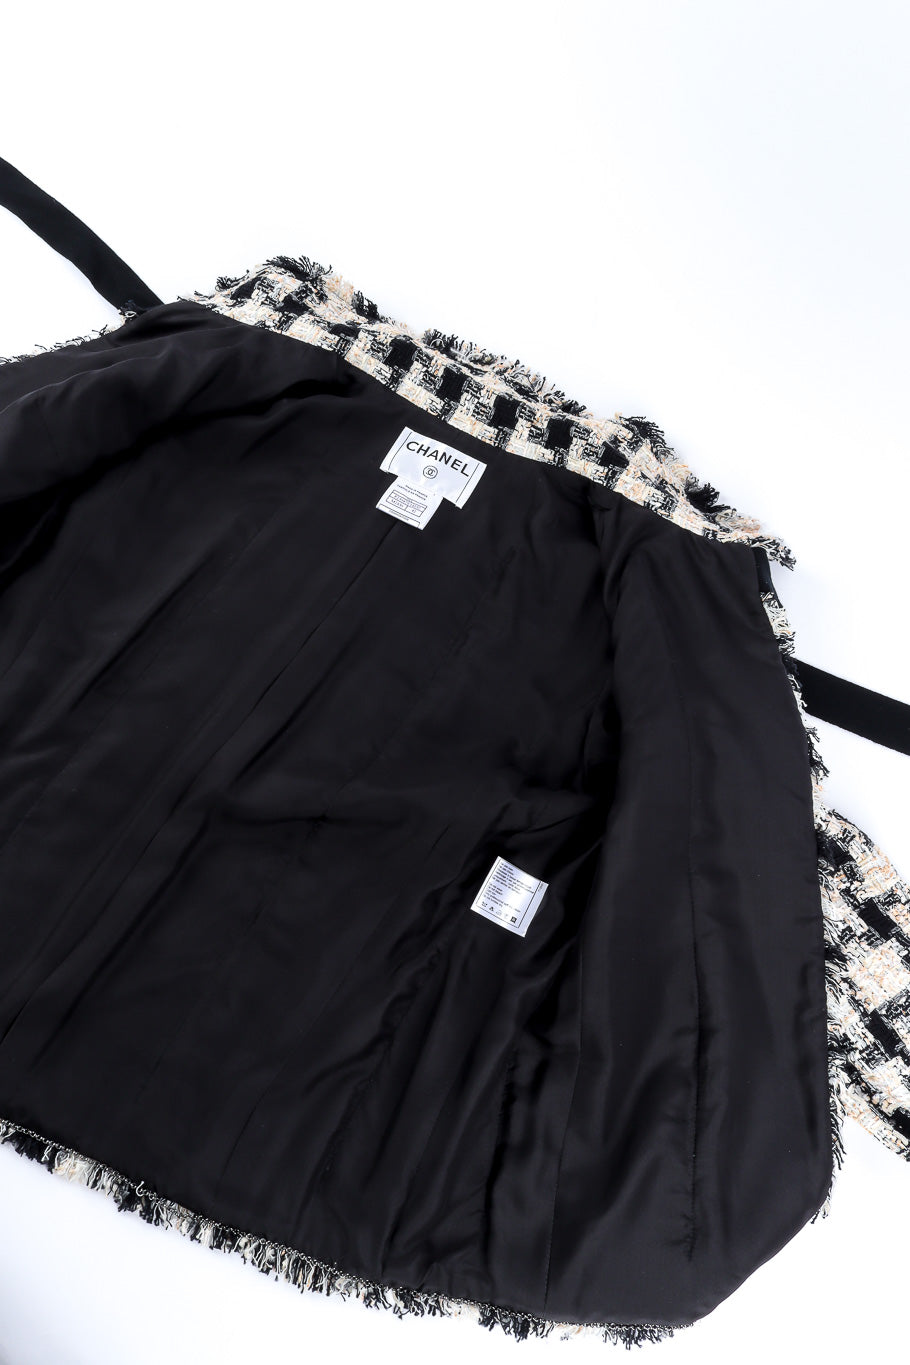 Bouclé check jacket by Chanel flat lay open @recessla